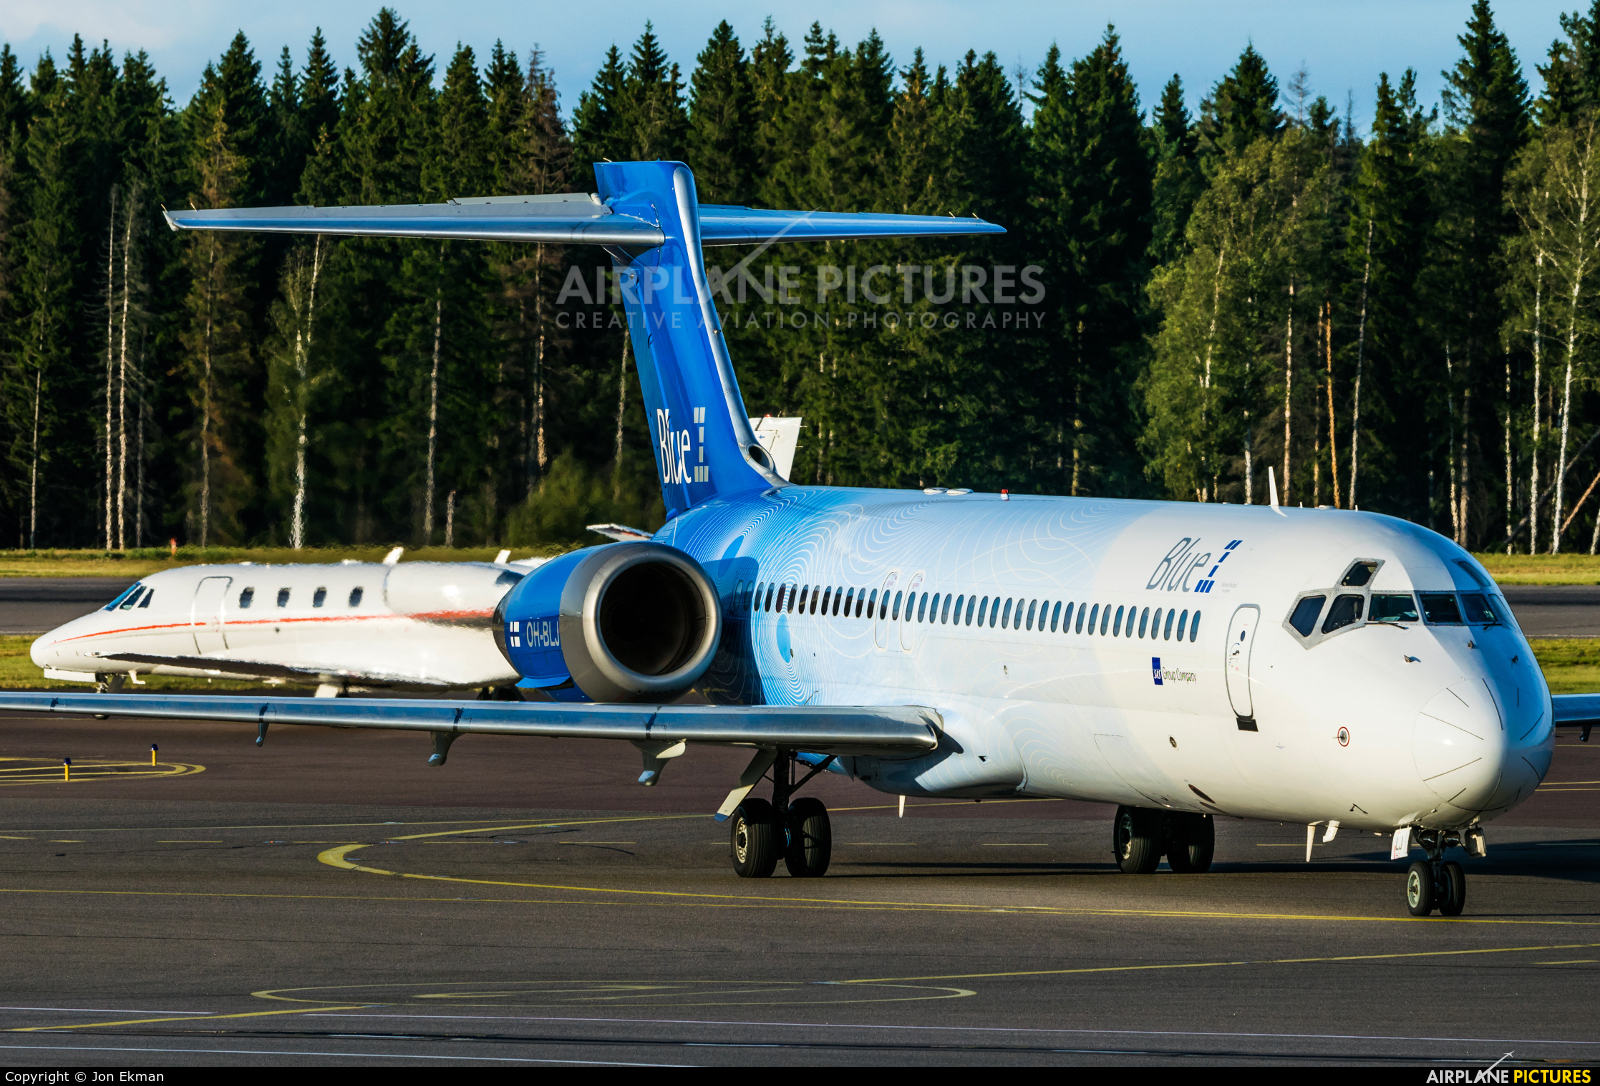 Blue1 OH-BLJ aircraft at Helsinki - Vantaa